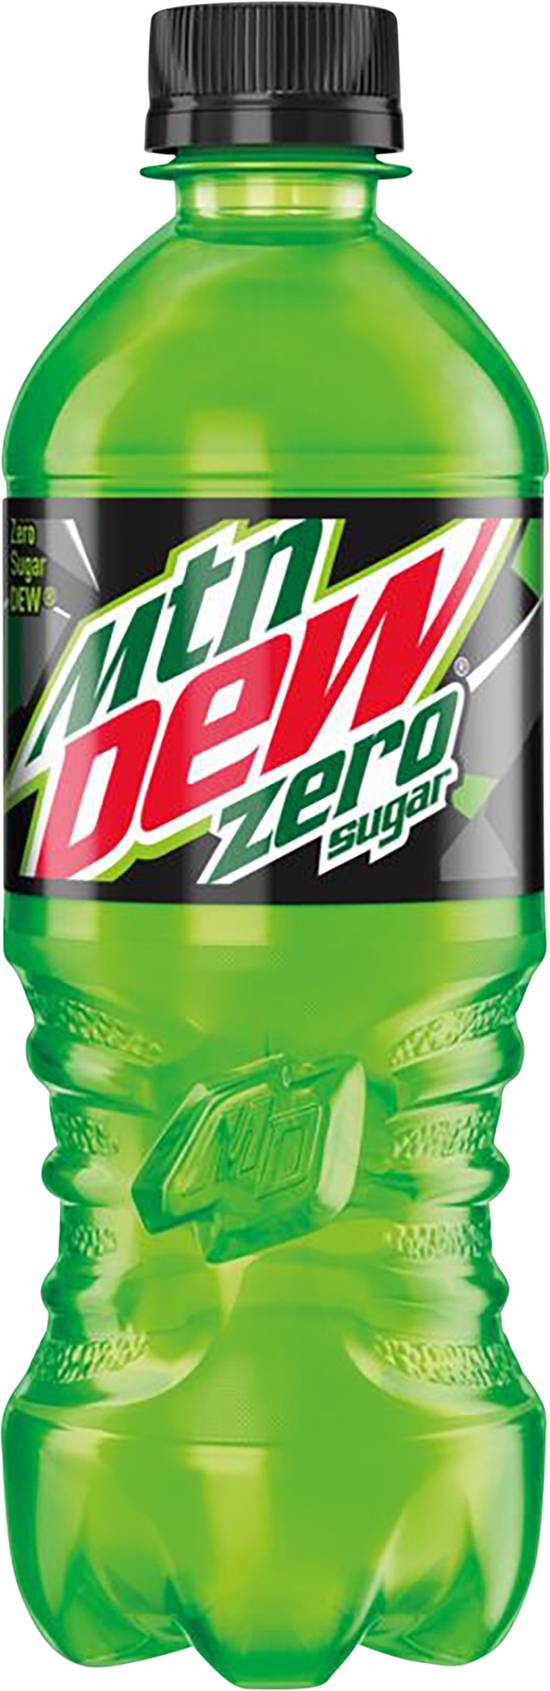 Mtn Dew Zero Sugar Soda (20 fl oz)